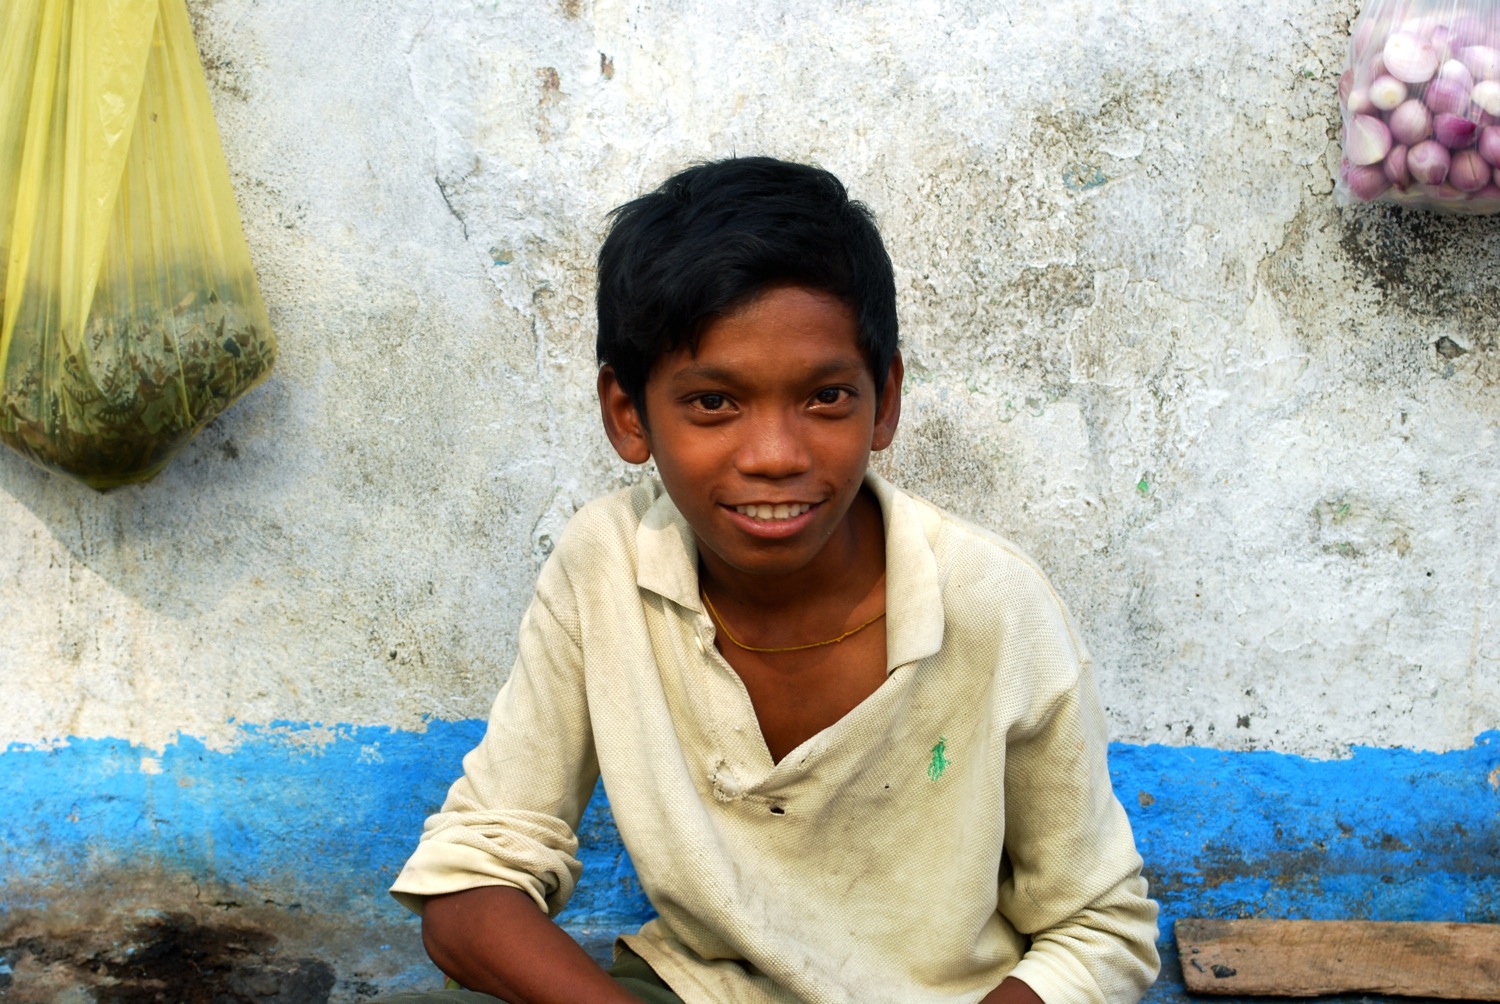 Salesman in Yangon, Burma